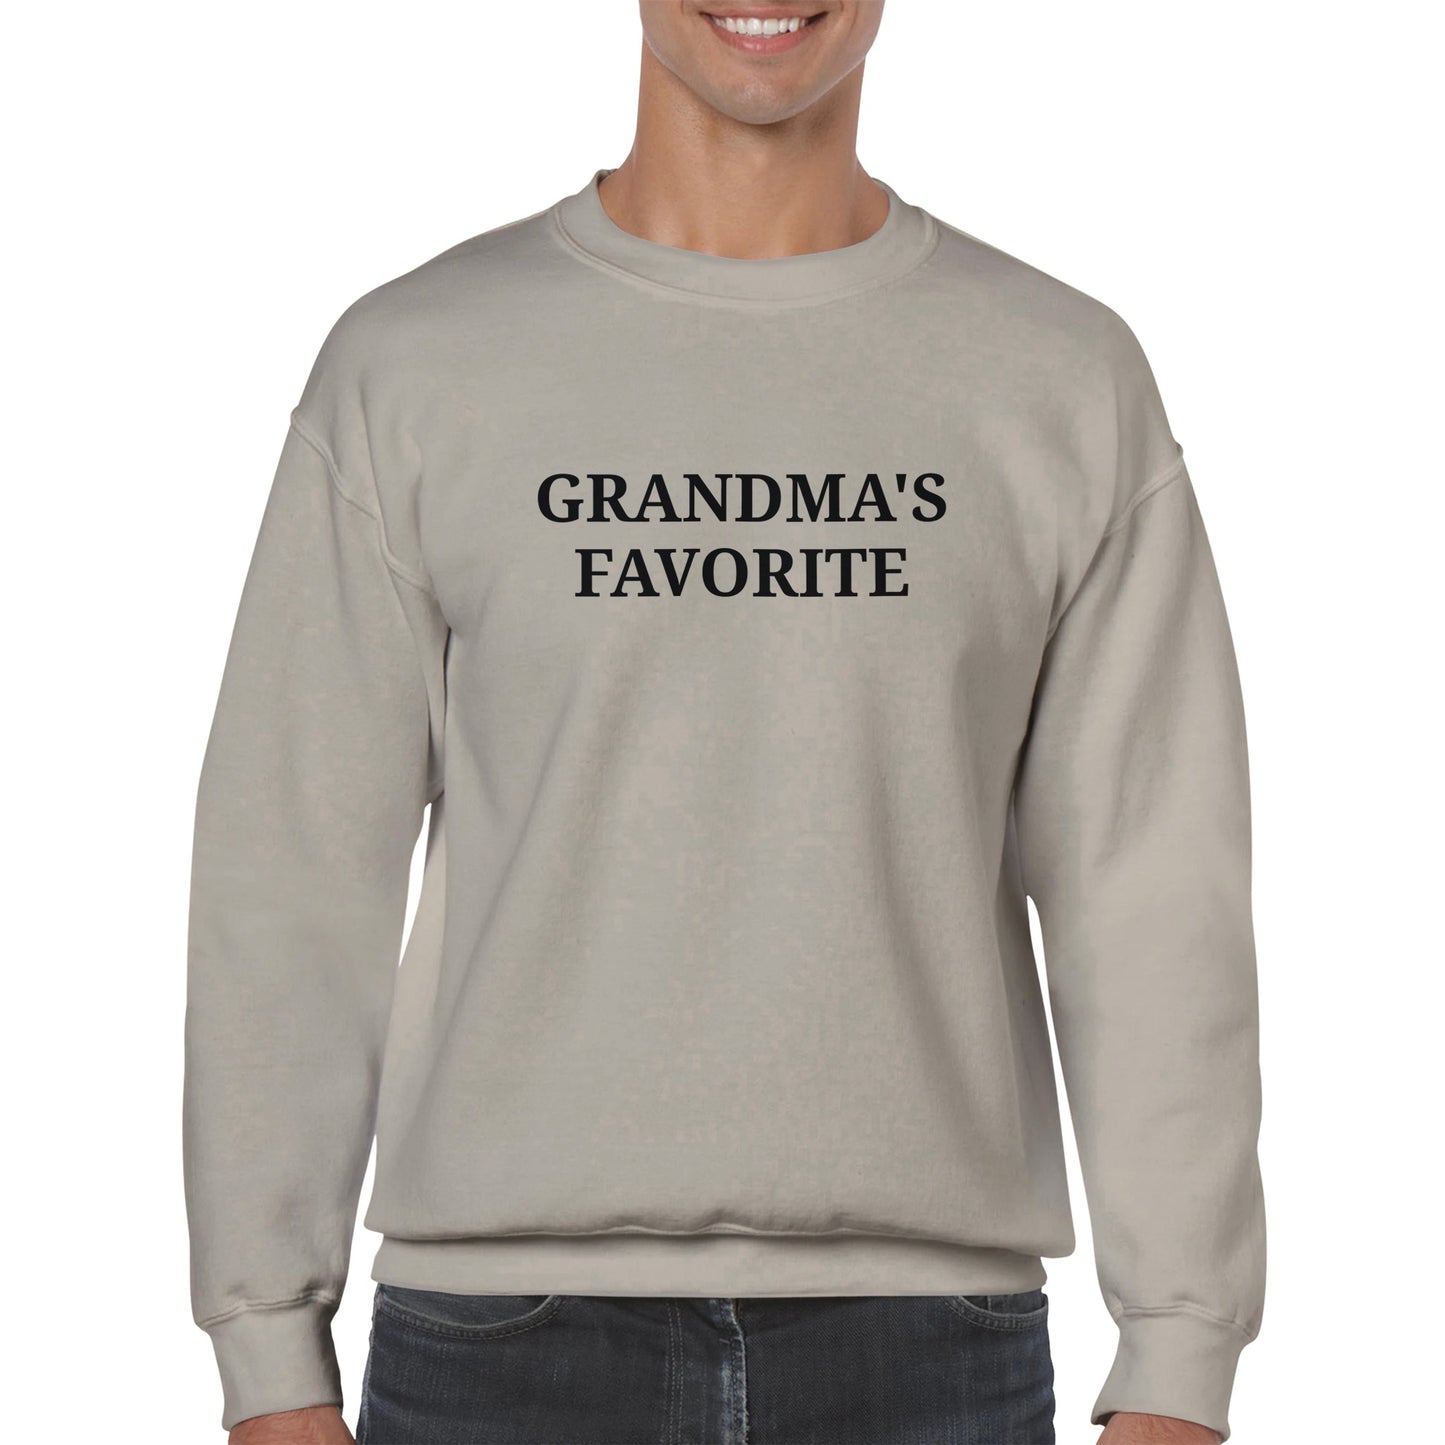 GRANDMA'S FAVORITE Unisex Crewneck Sweatshirt